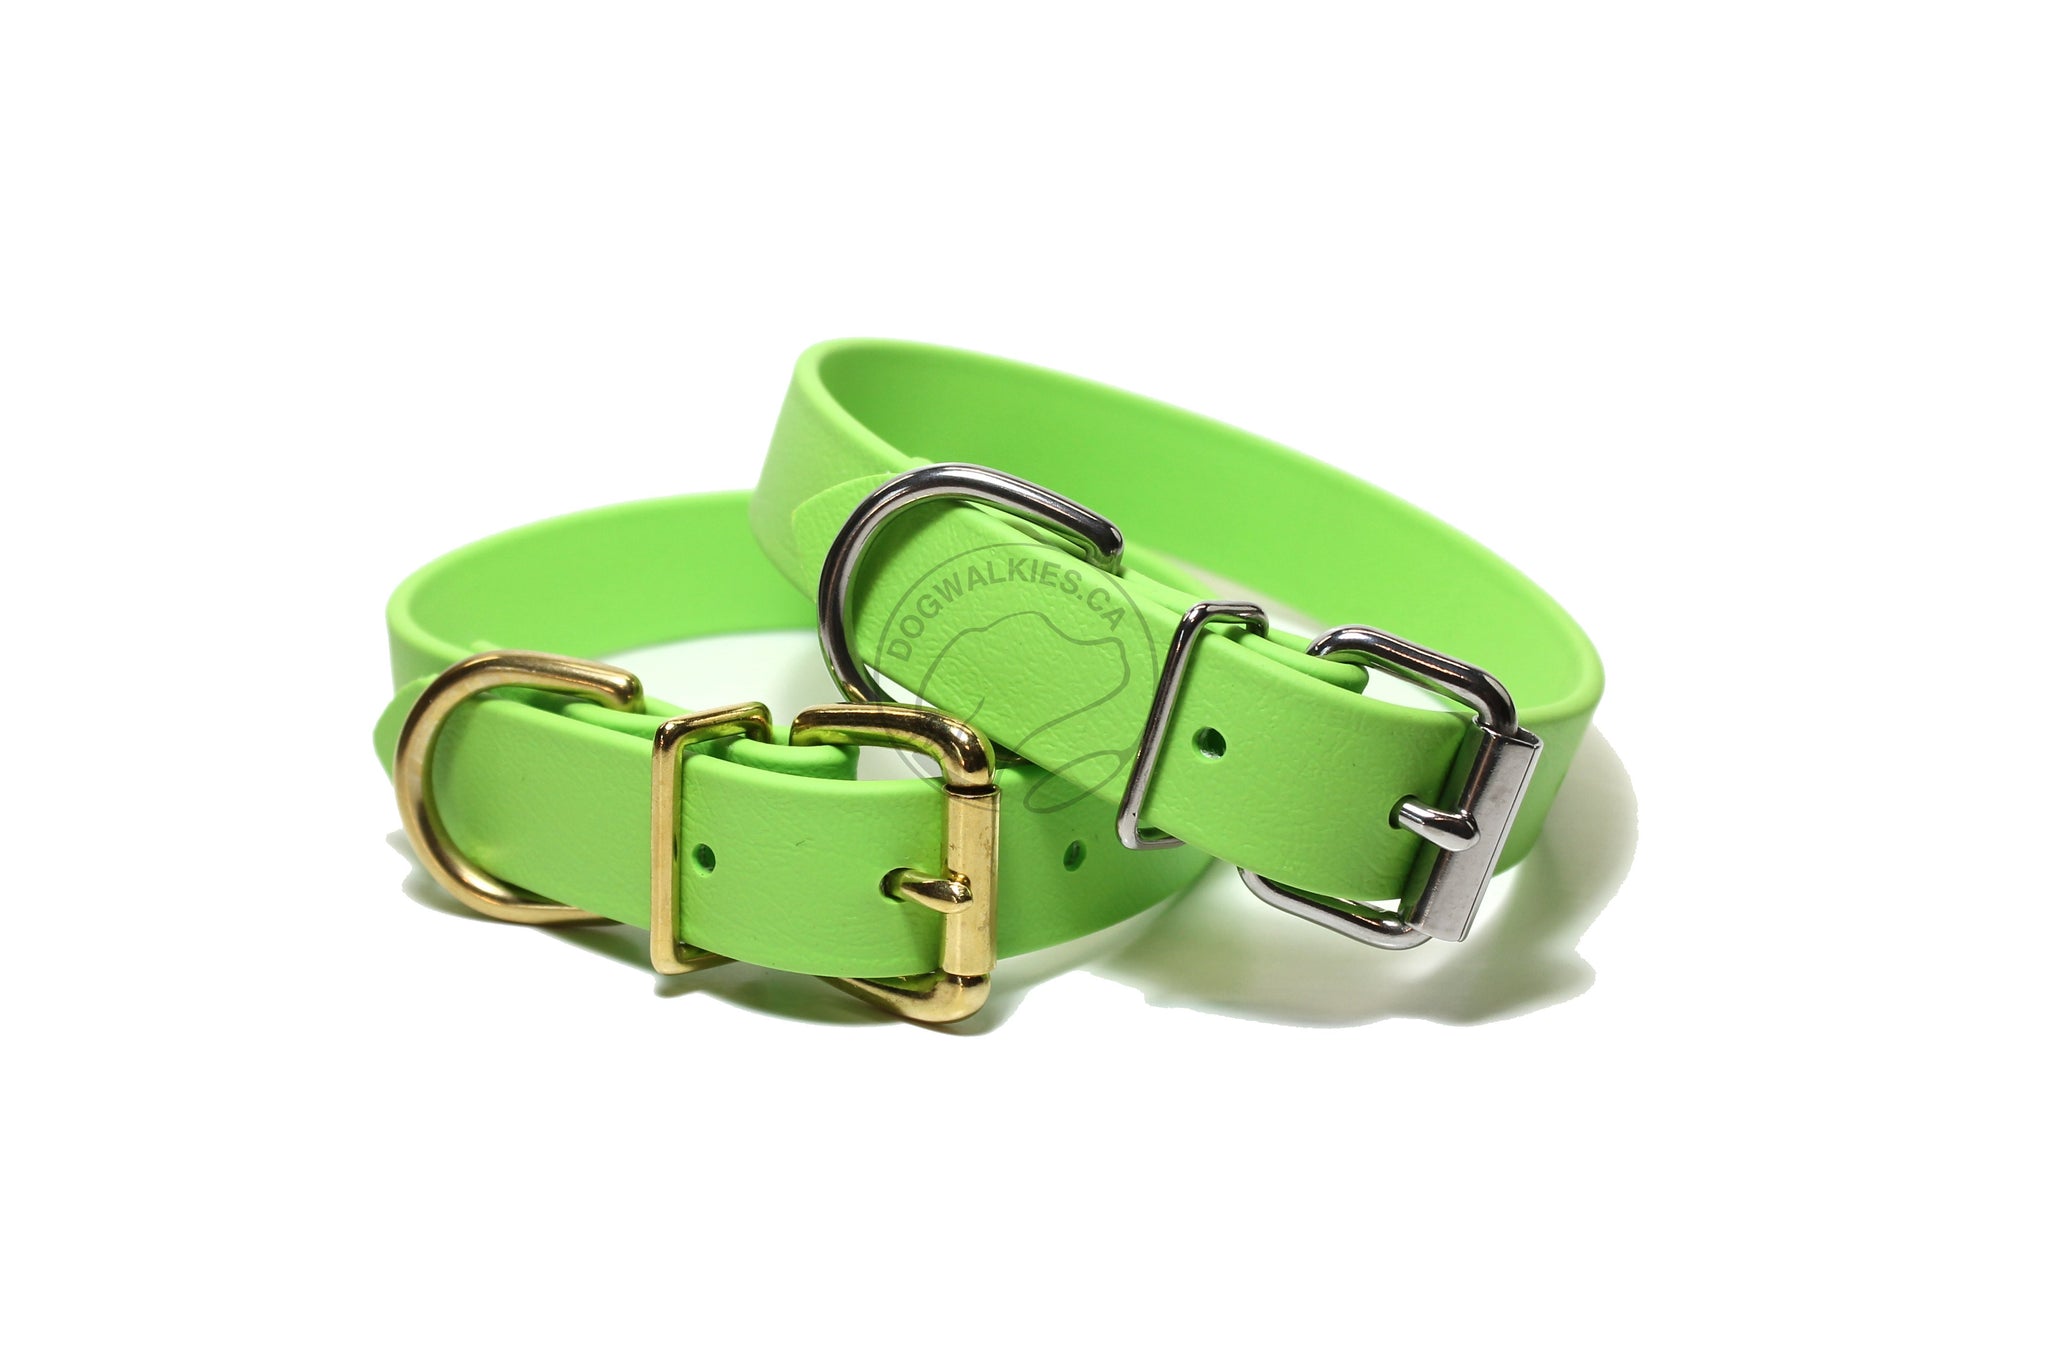 Lime Green Biothane Dog Collar - 1 inch (25mm) wide